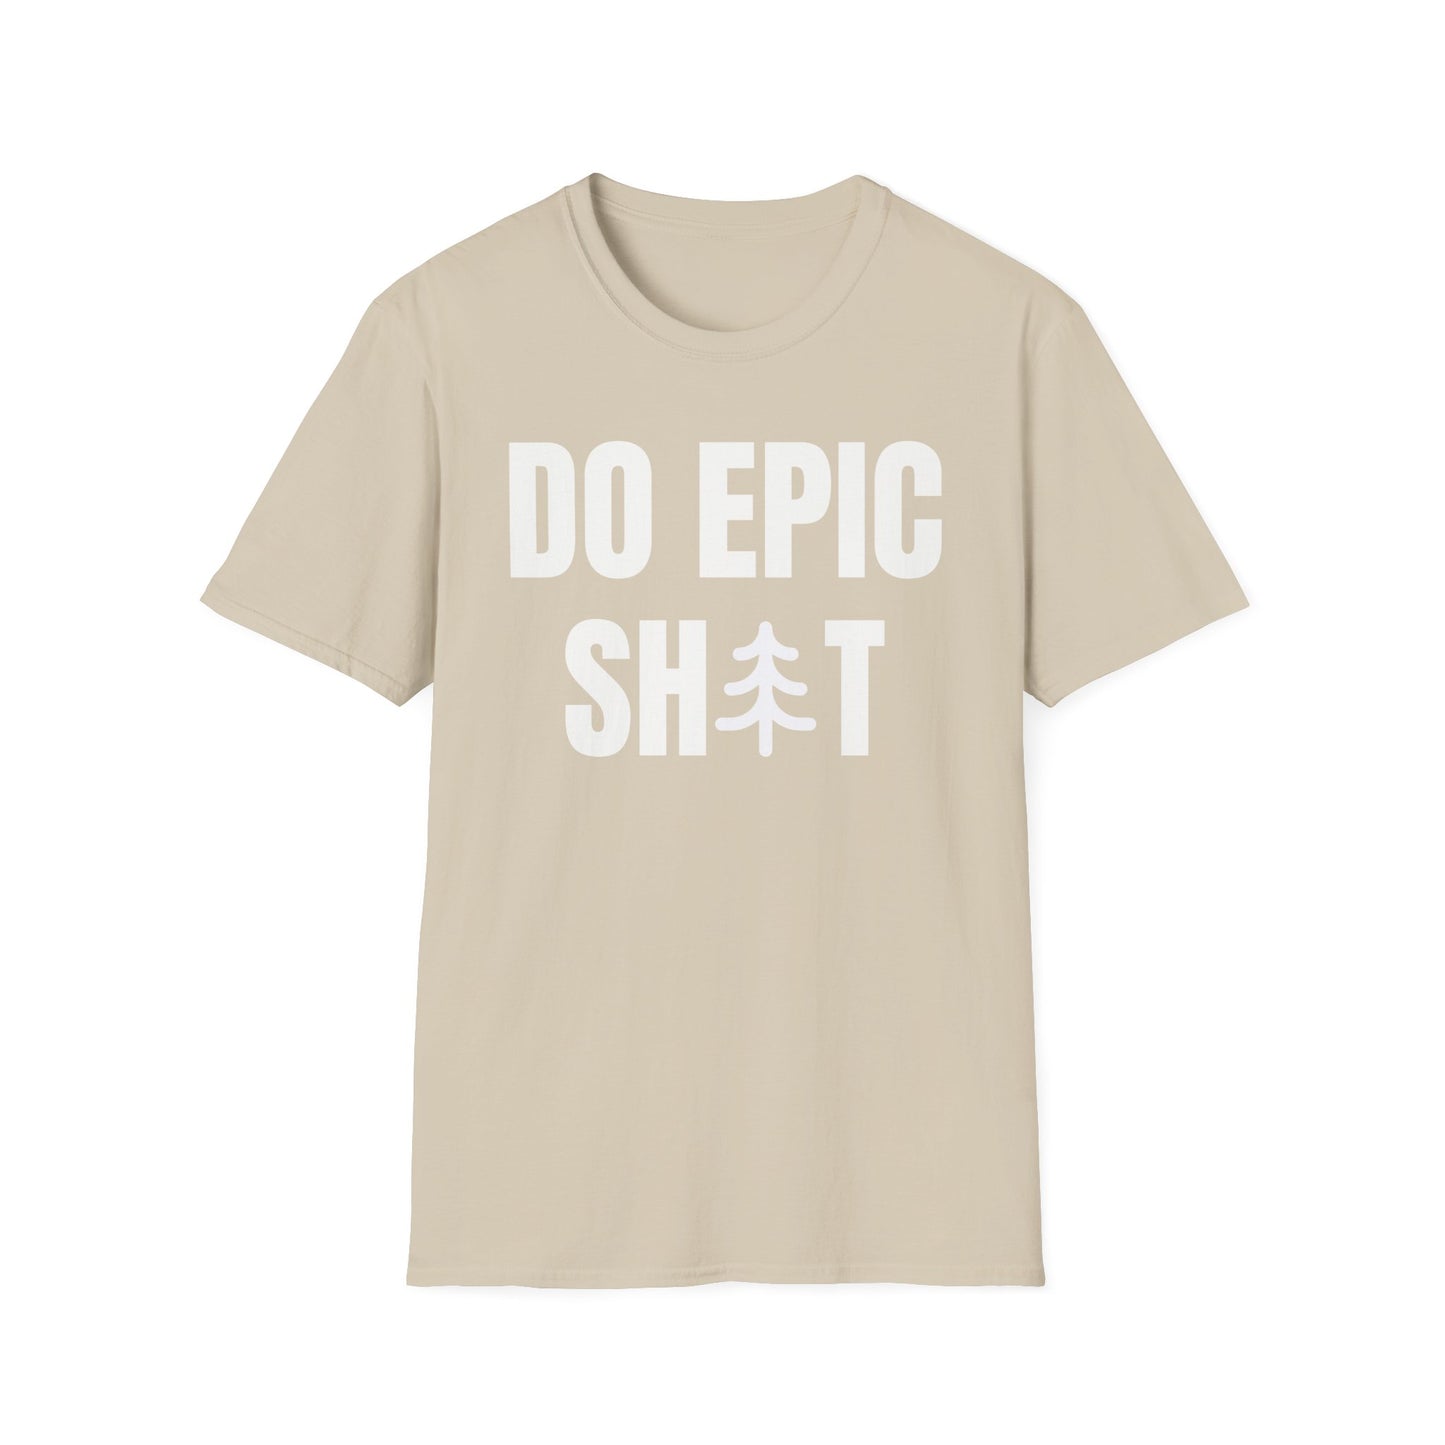 Do Epic Shit T-Shirt, Funny Tee, Boyfriend Gift, Girlfriend Gift, Dad Gift, Adventure T-shirt, Do Epic Stuff